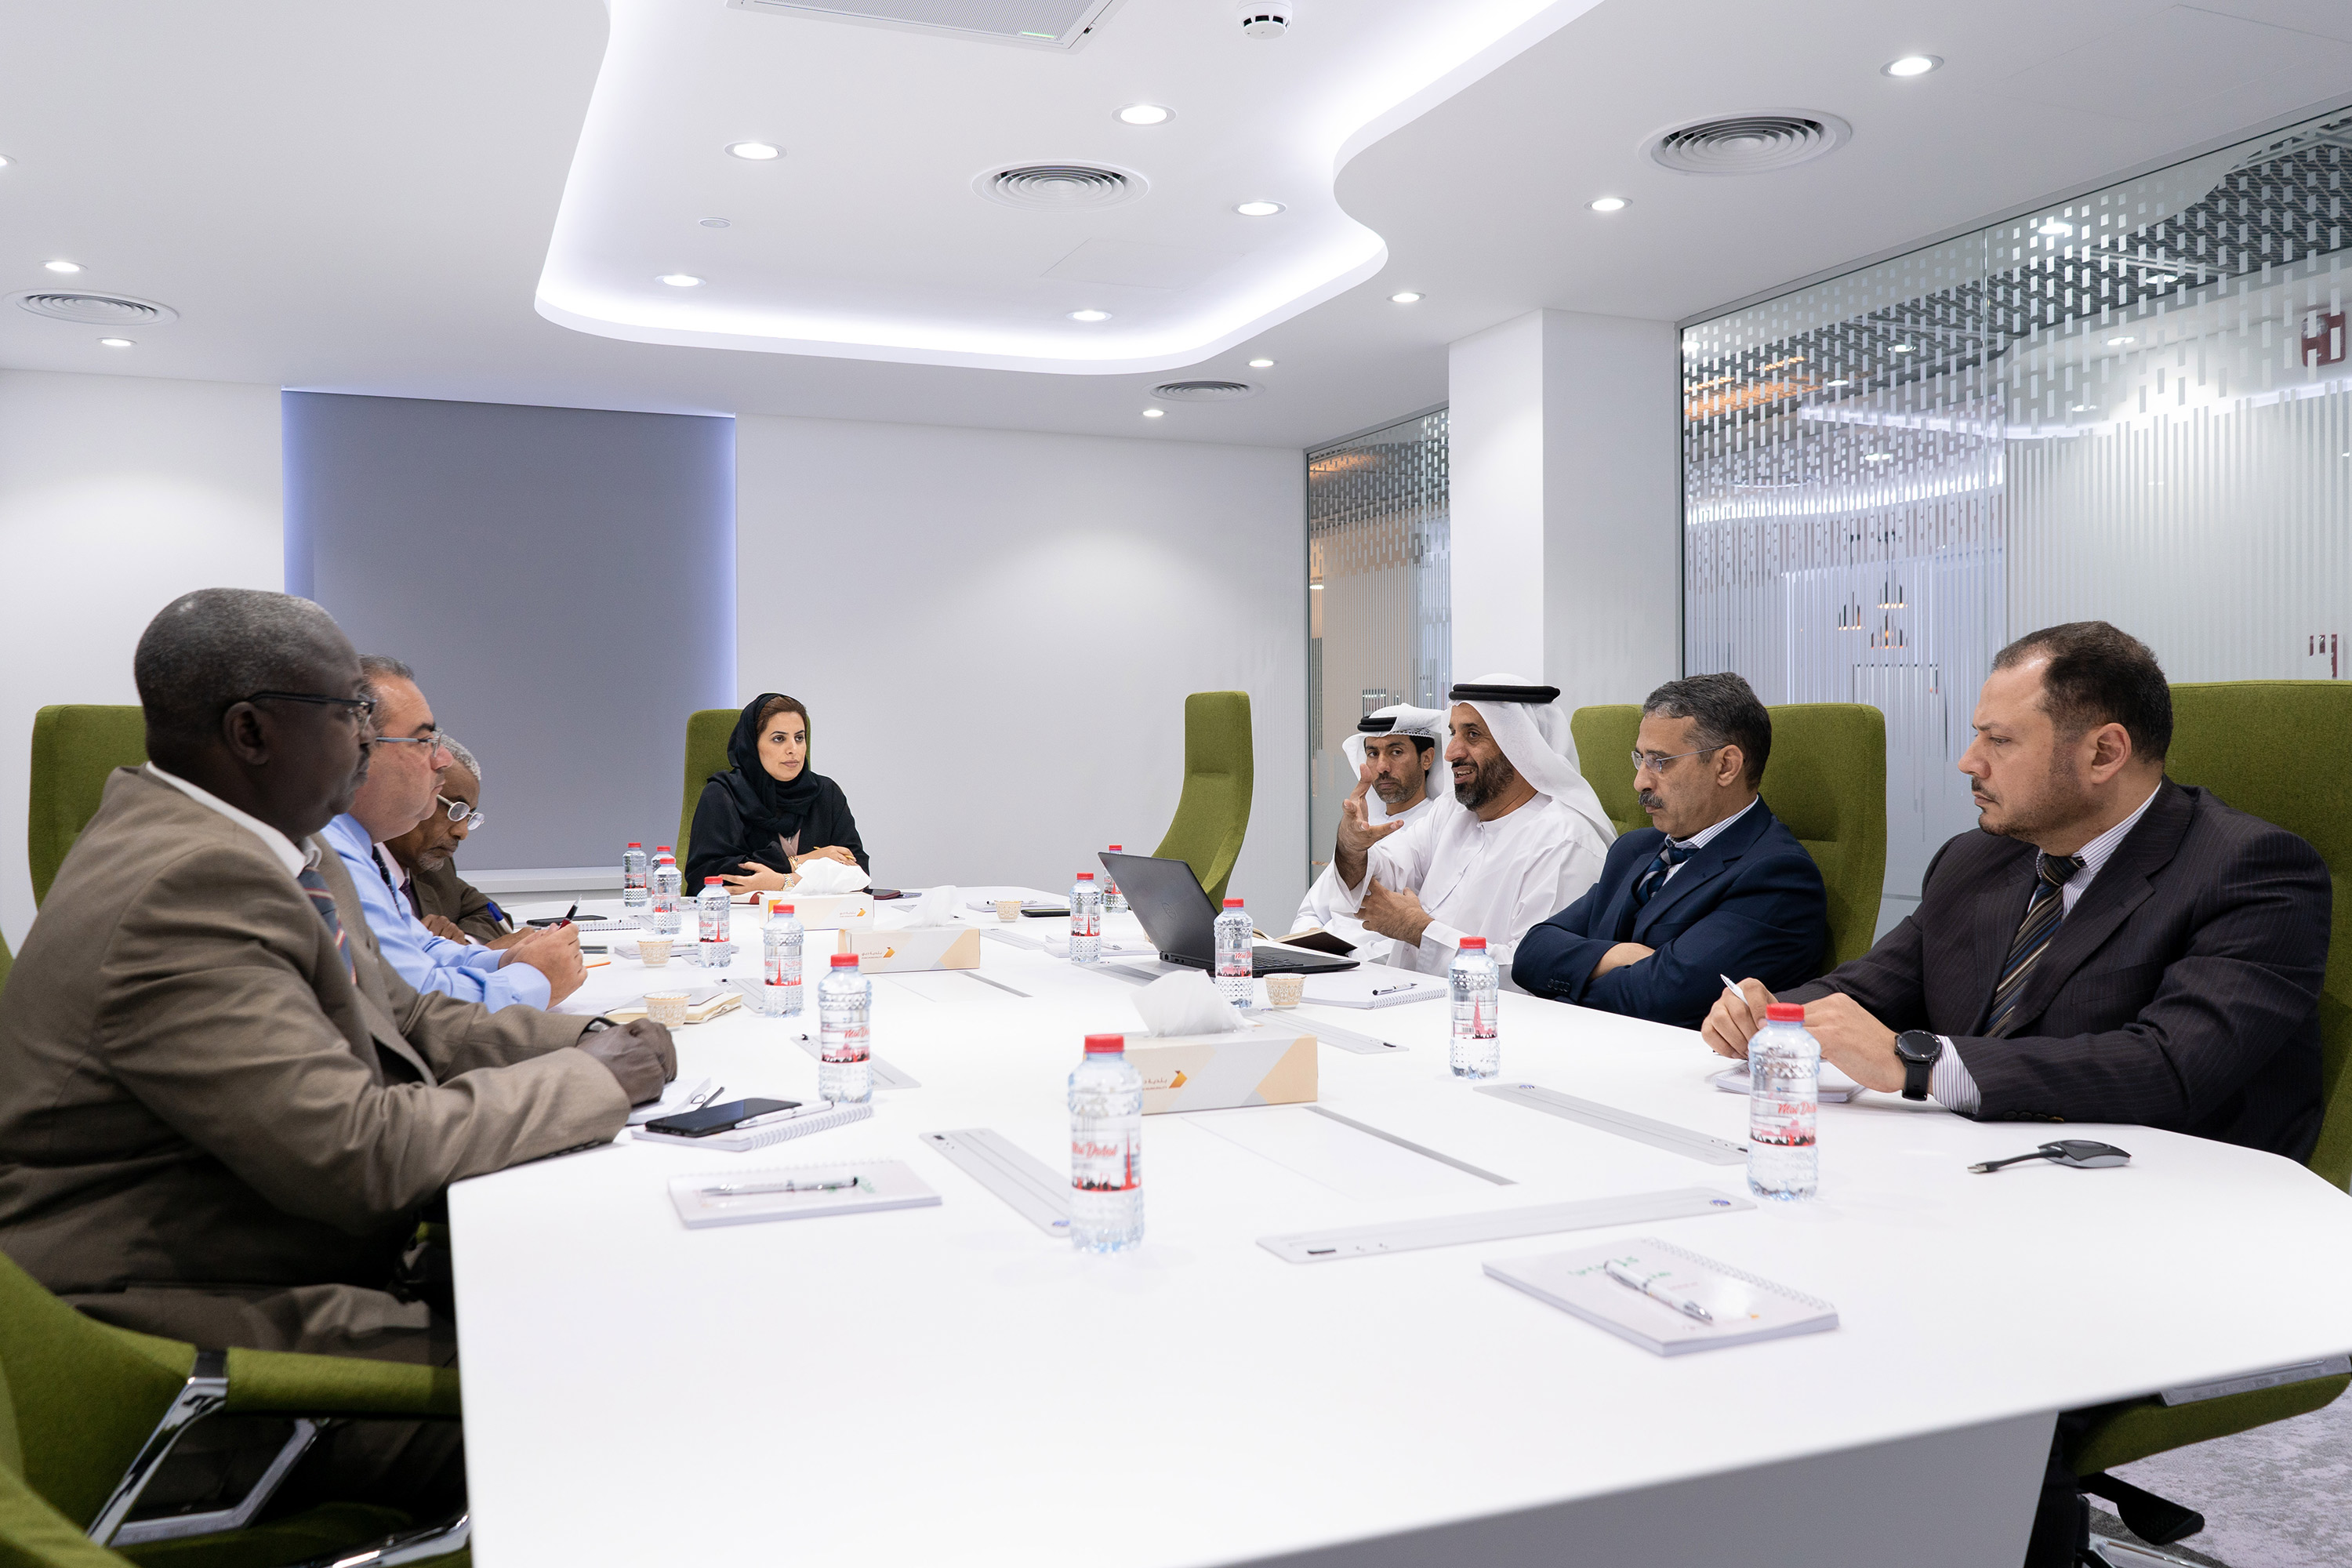 Federal GIS center of UAE: A Visit to GIS Center in Dubai Municiplaity January 2020